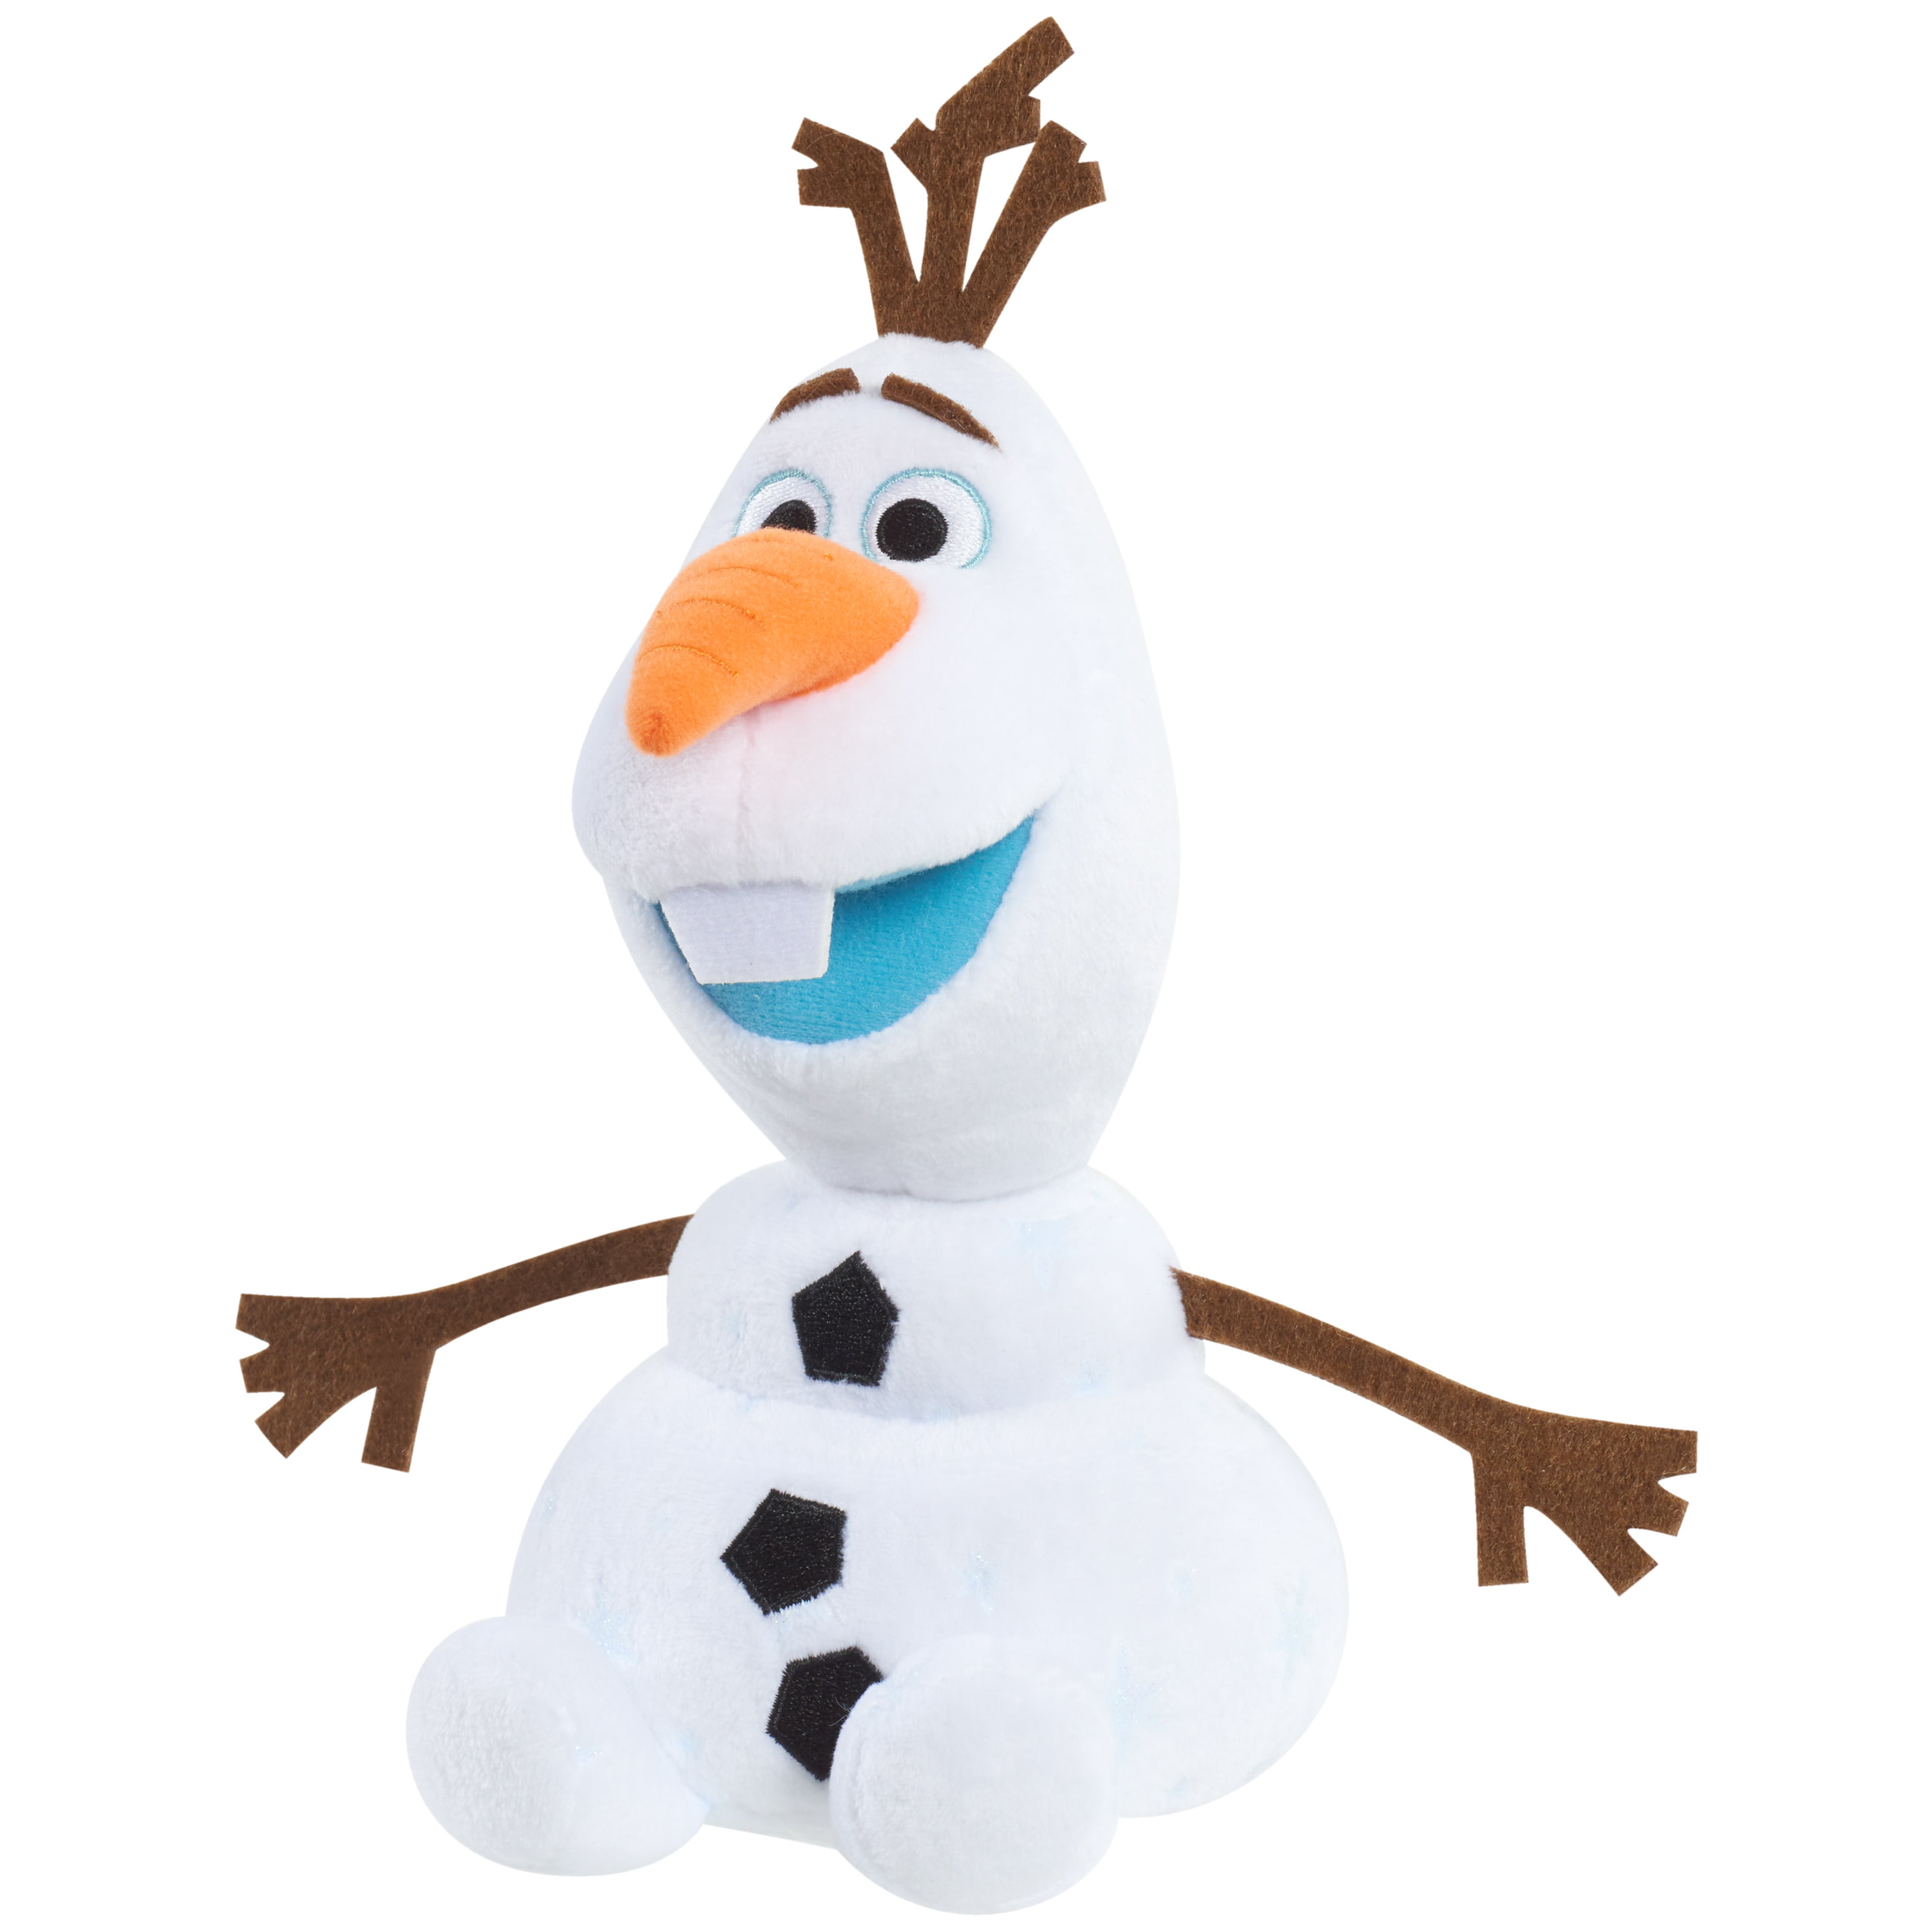 Disney Frozen 2 Plush Olaf 12 Inch Tall Stuffed Animal B15 for sale online 